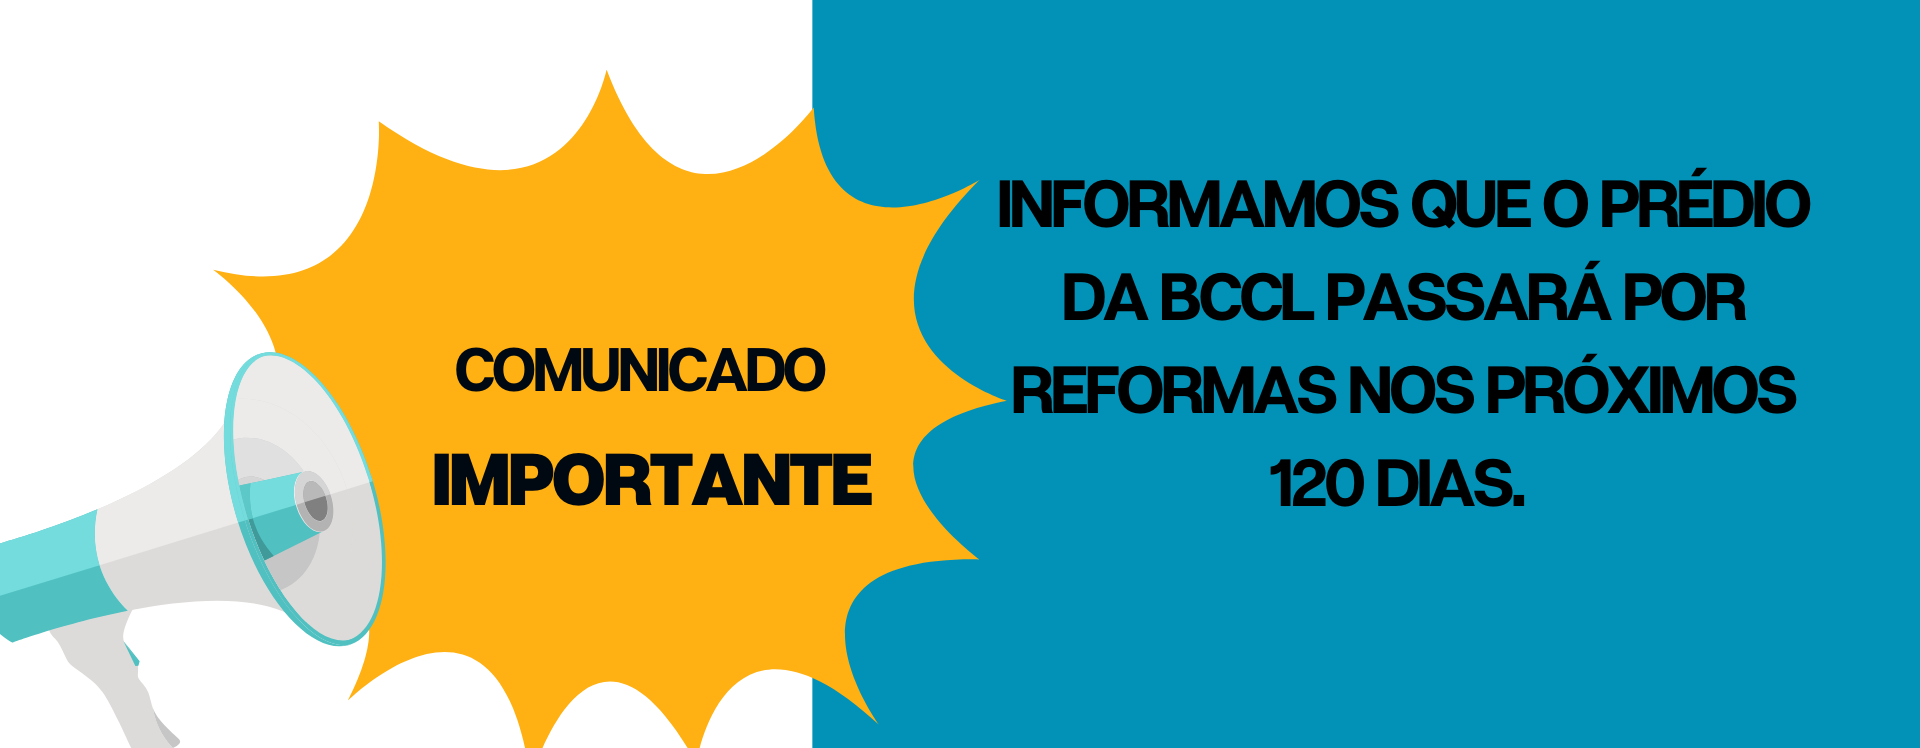 Reforma BCCL